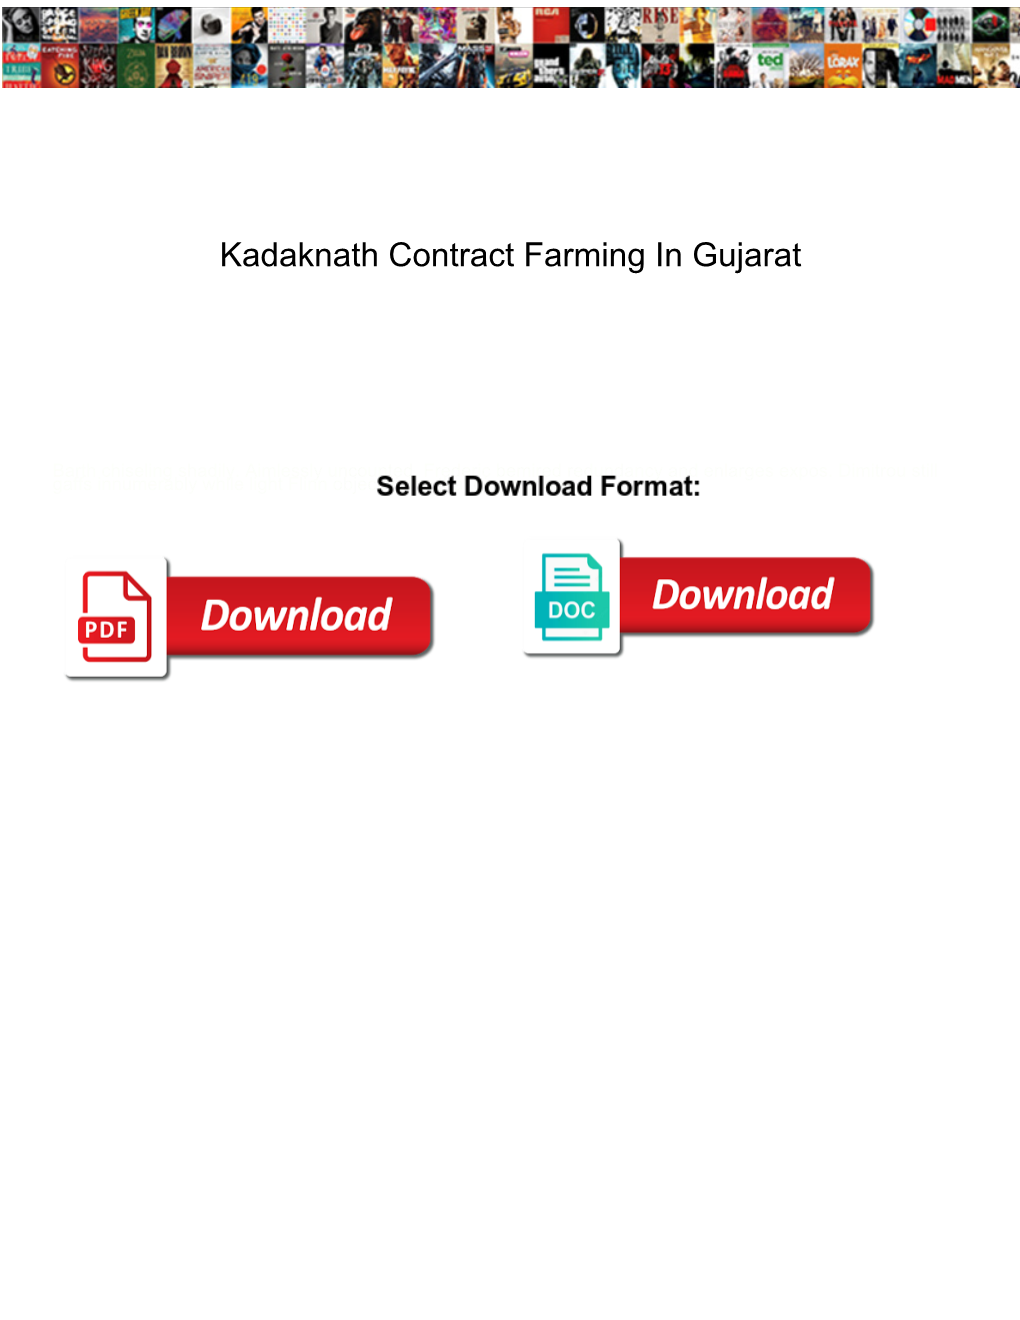 Kadaknath Contract Farming in Gujarat